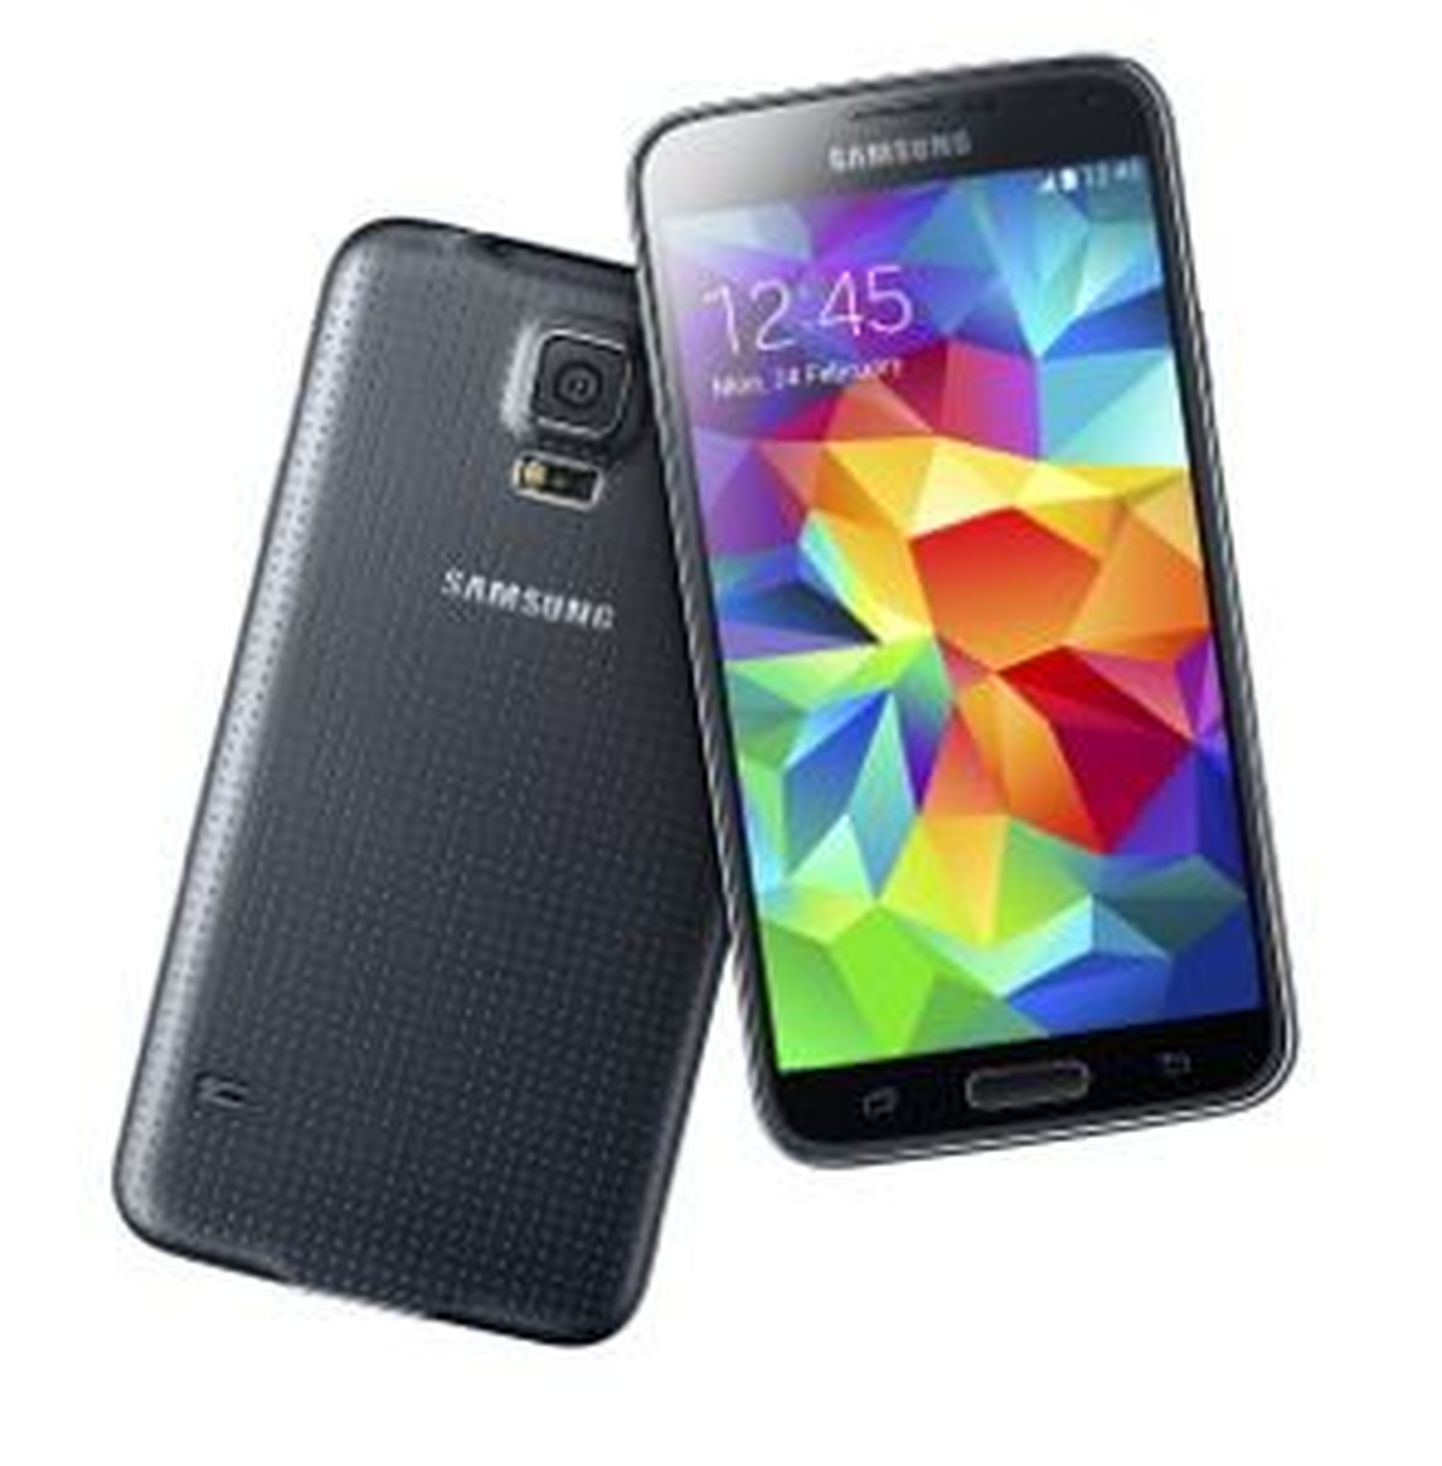 Samsung Galaxy S5. Pilt on illustratiivne.